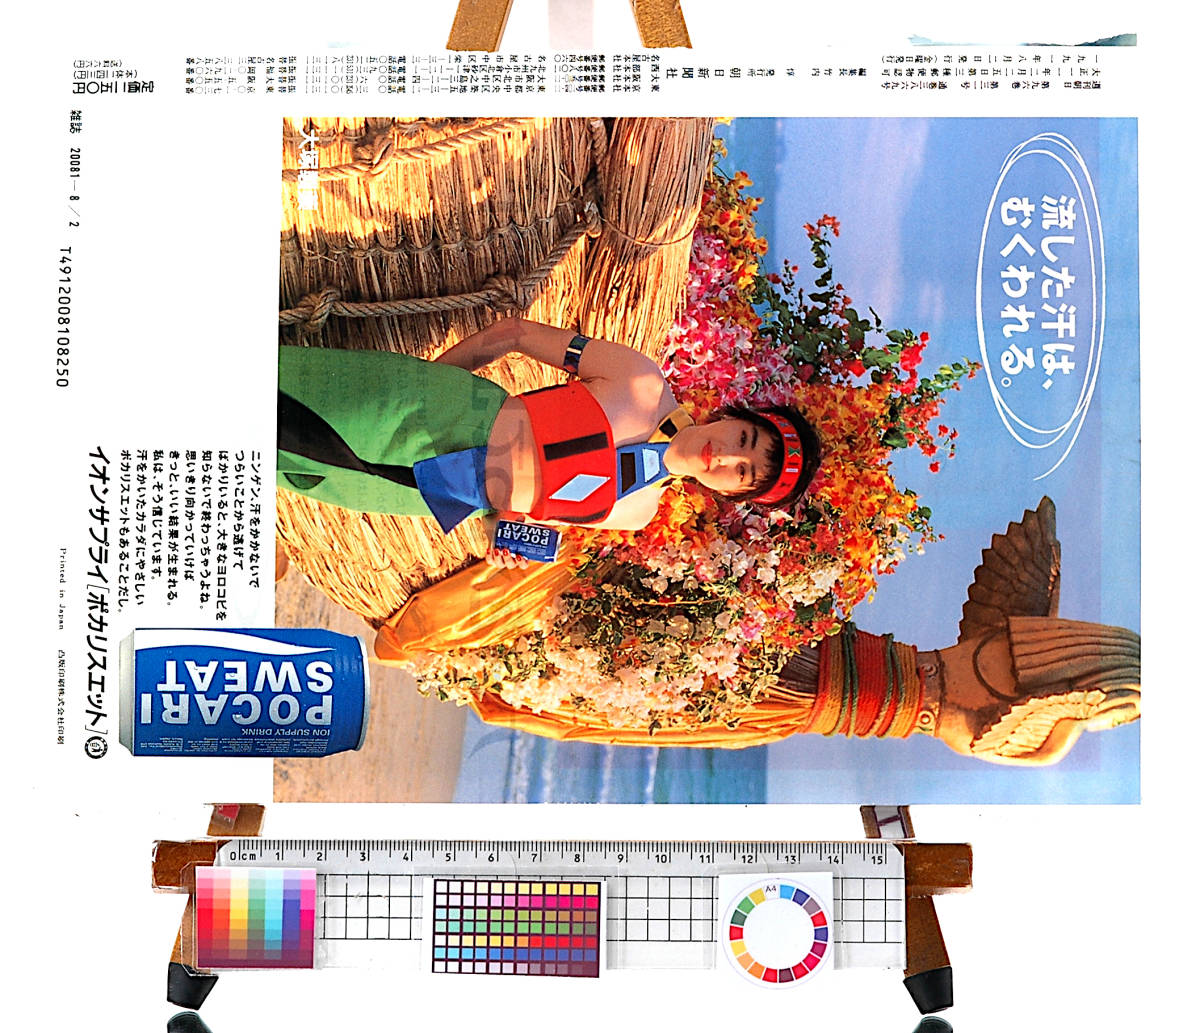 [Not Displayed New][Delivery Free]1991 Weekly Asahi Front/Back cove Set Rie MIyazawa(POCARI SWEAT)宮沢りえ ポカリスエット[tag2202]